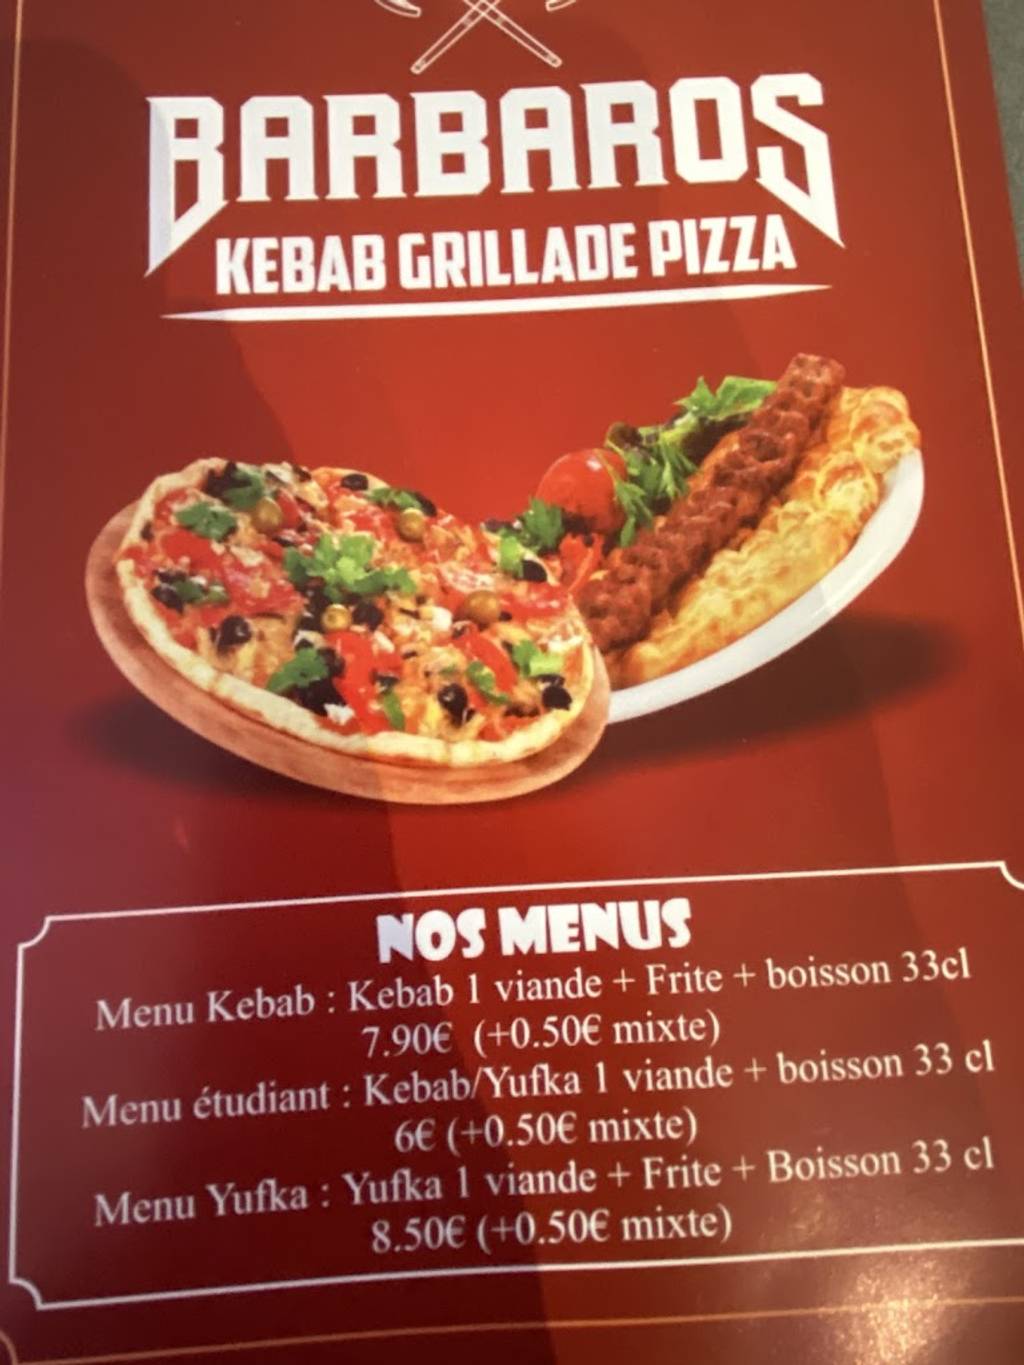 BARBAROS kebab grillade pizza Strasbourg - Food Ingredient Recipe Poster Cuisine